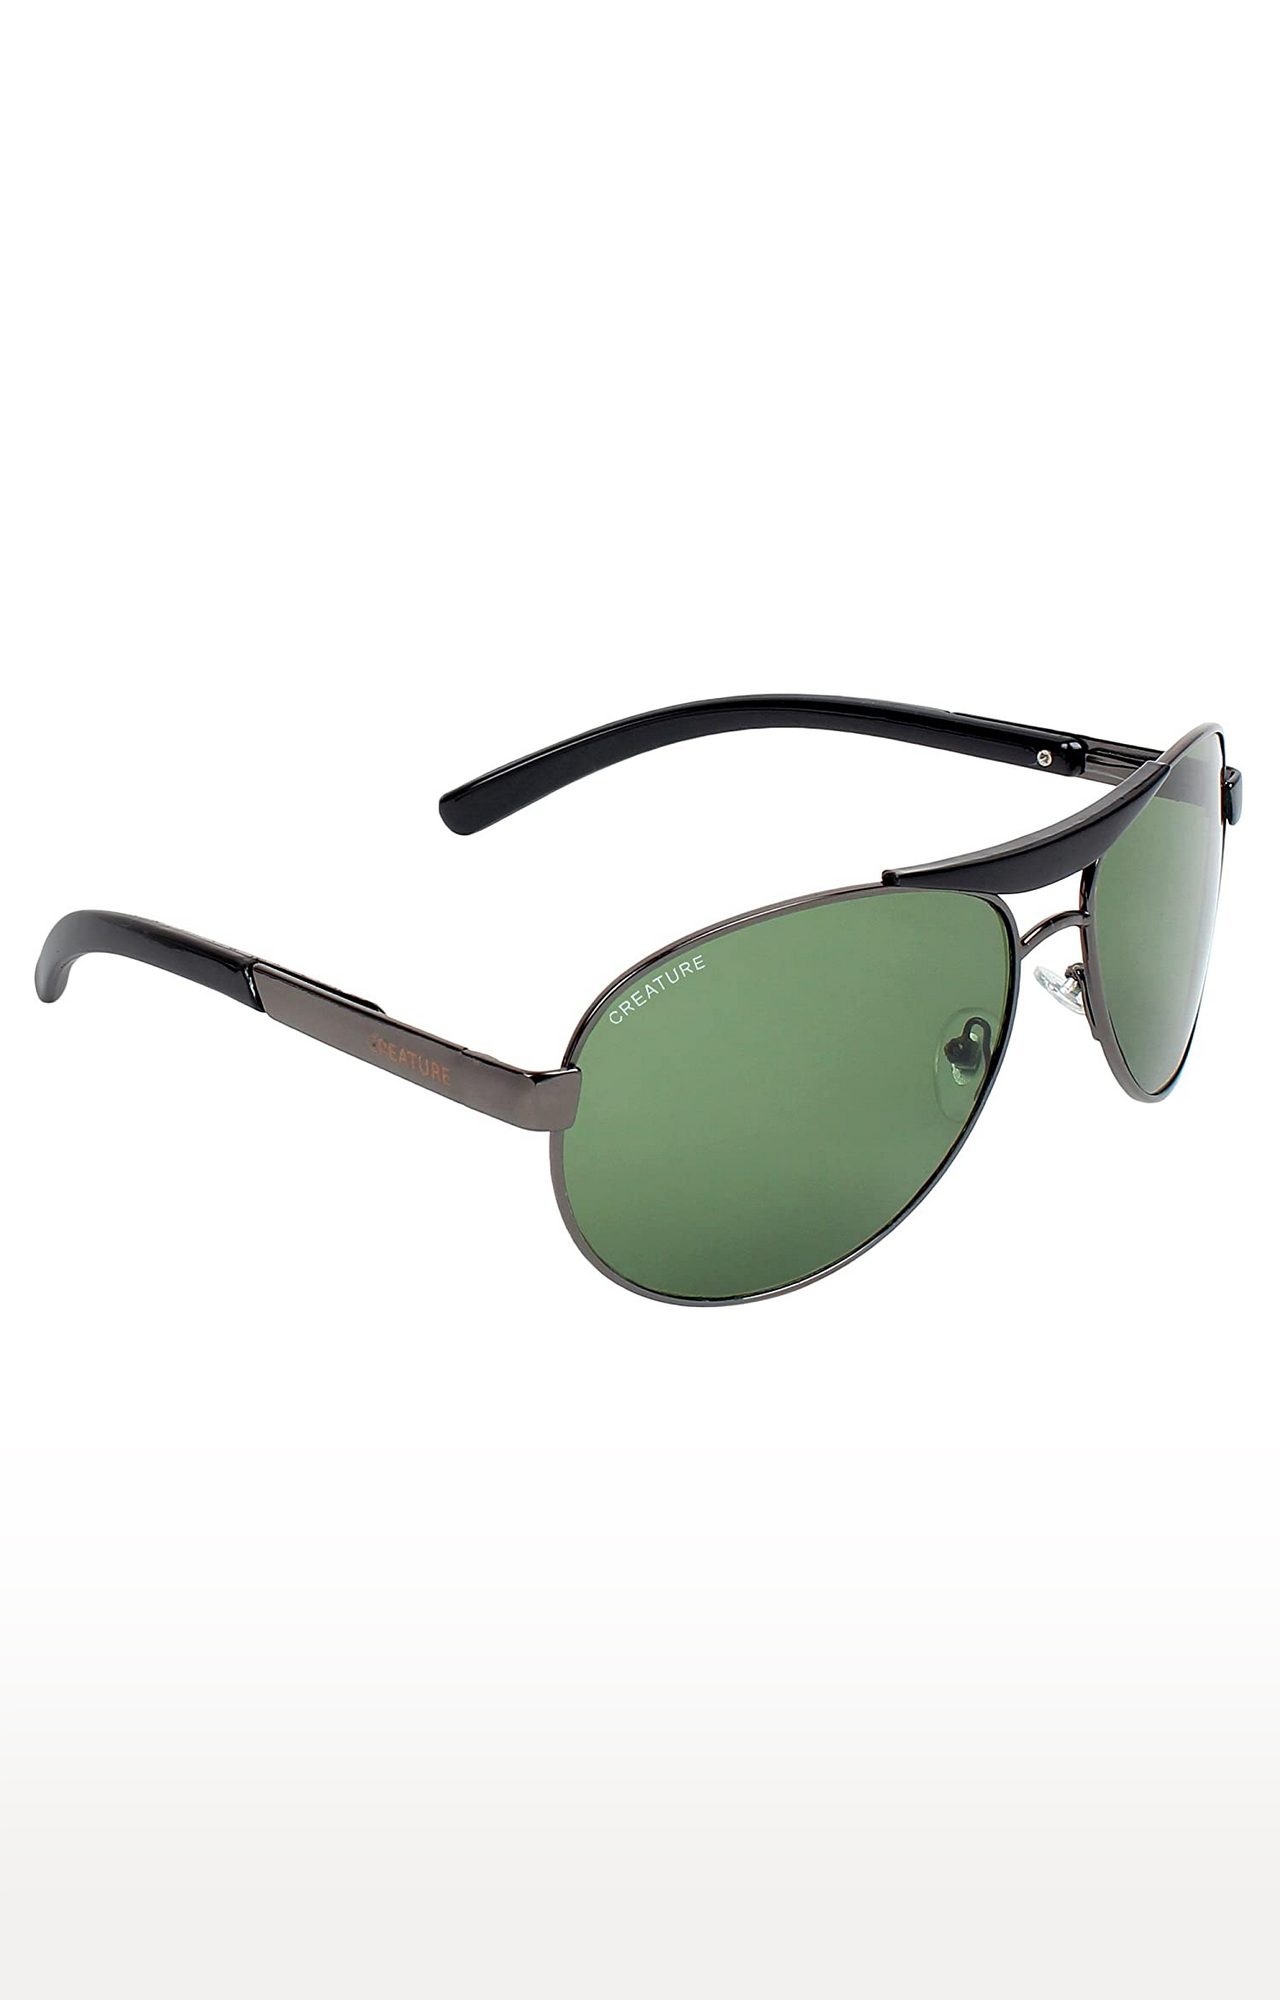 CREATURE | CREATURE Green & Multicolour Aviator Sunglasses Combo with UV Protection (Lens-Green & Multicolour|Frame-Grey & Black) 1